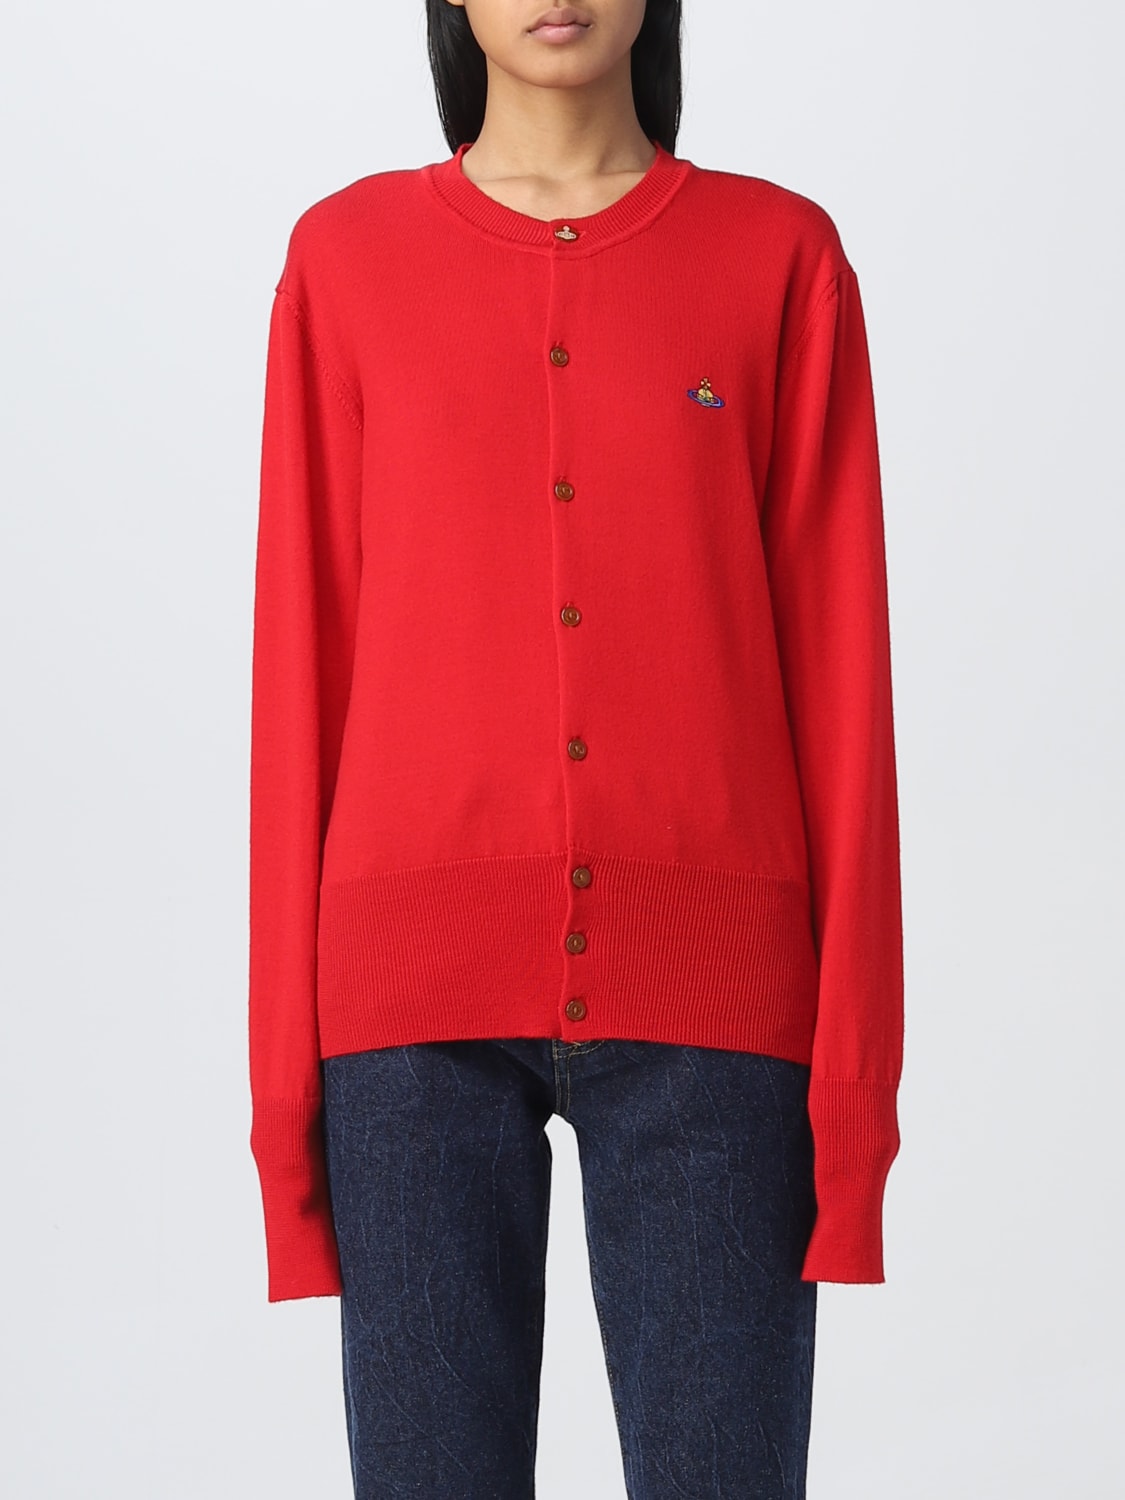 Vivienne Westwood 赤 カーディガンファッション